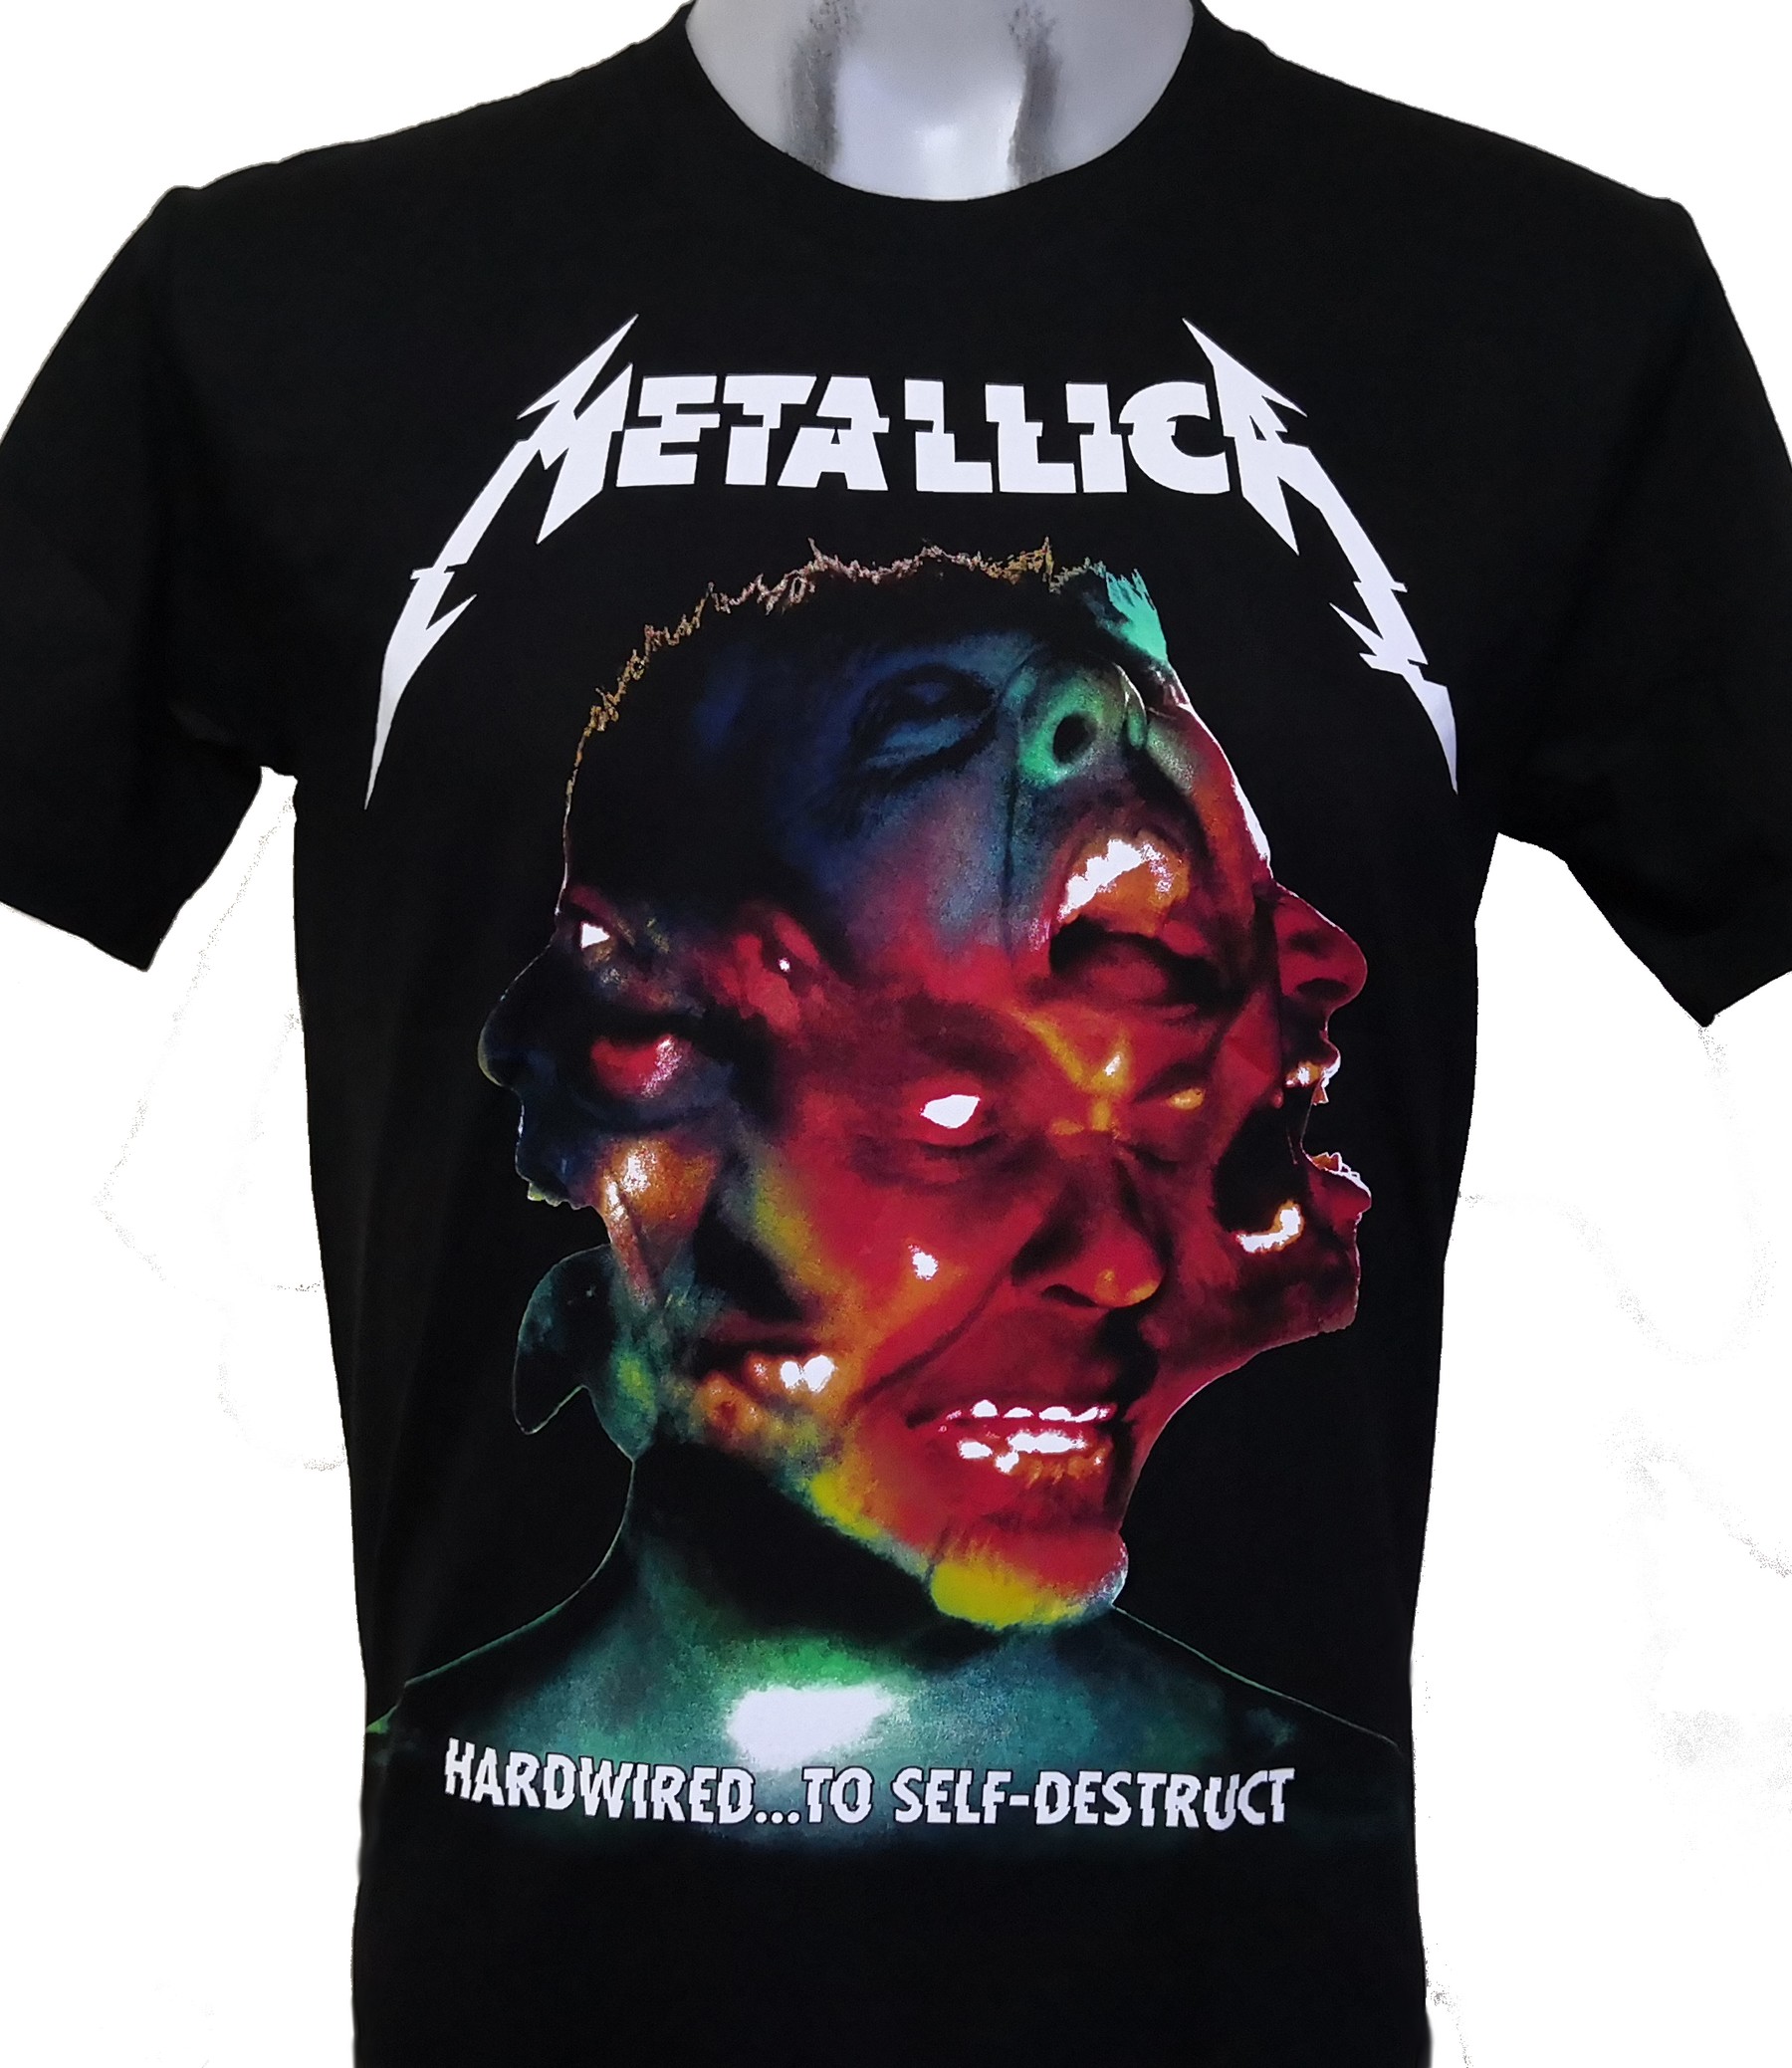 Metallica long-sleeved t-shirt Master of Puppets size M – RoxxBKK